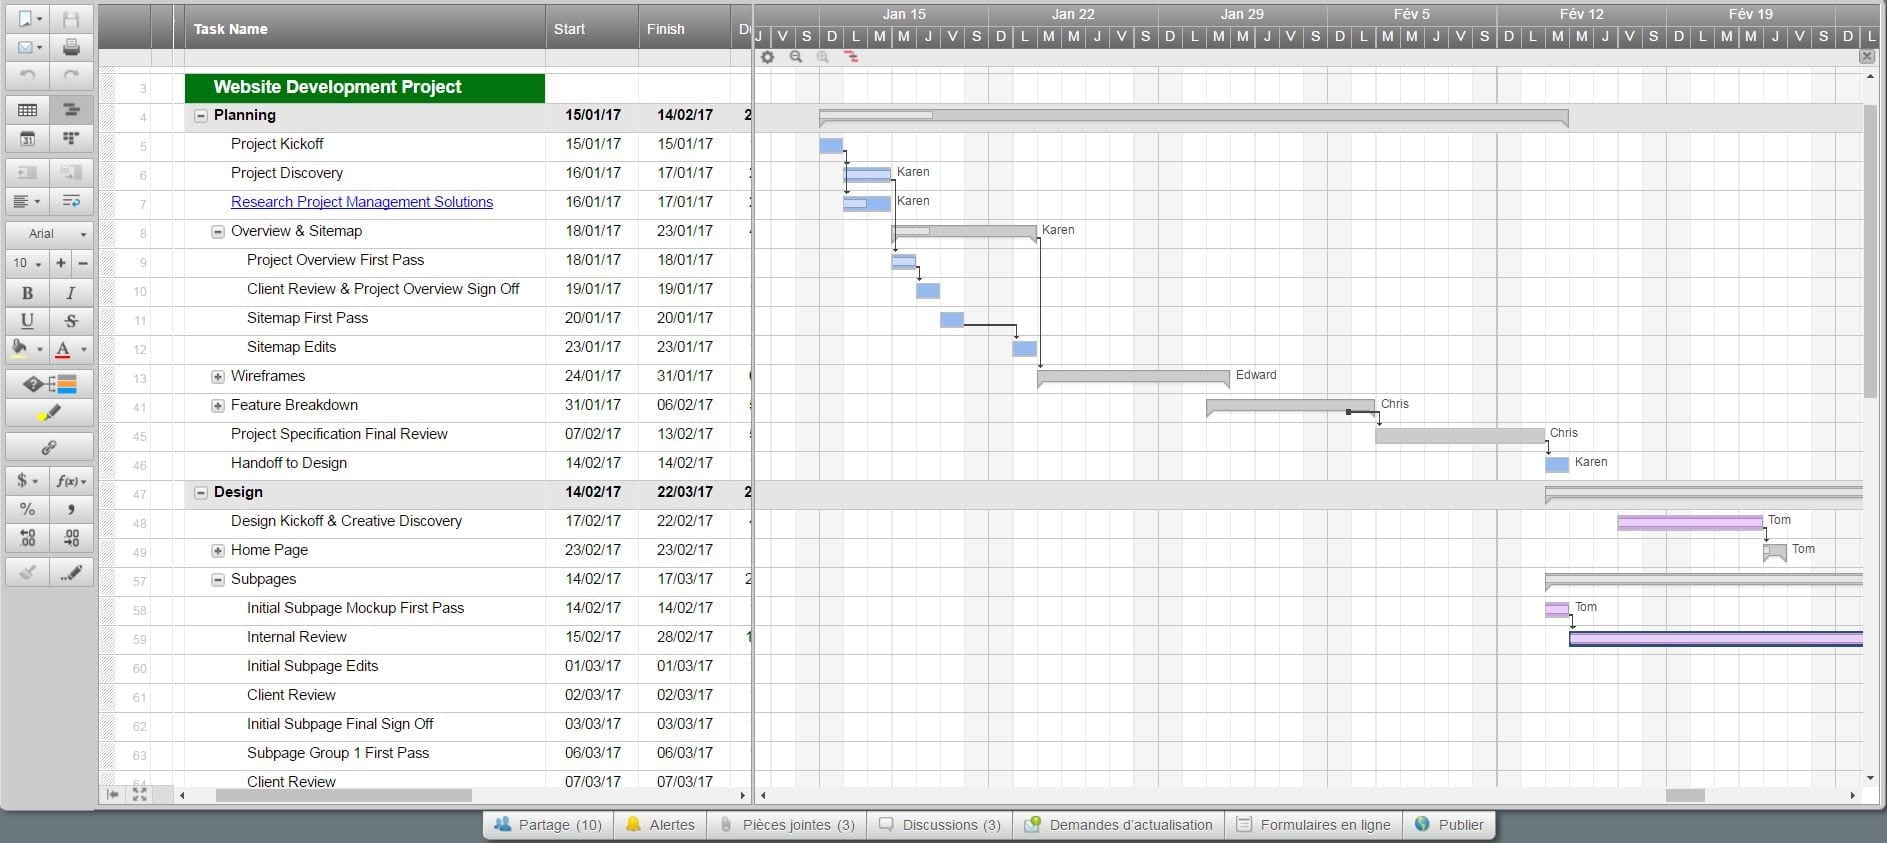 Timeline Spreadsheet Template Timeline Spreadsheet Spreadsheet